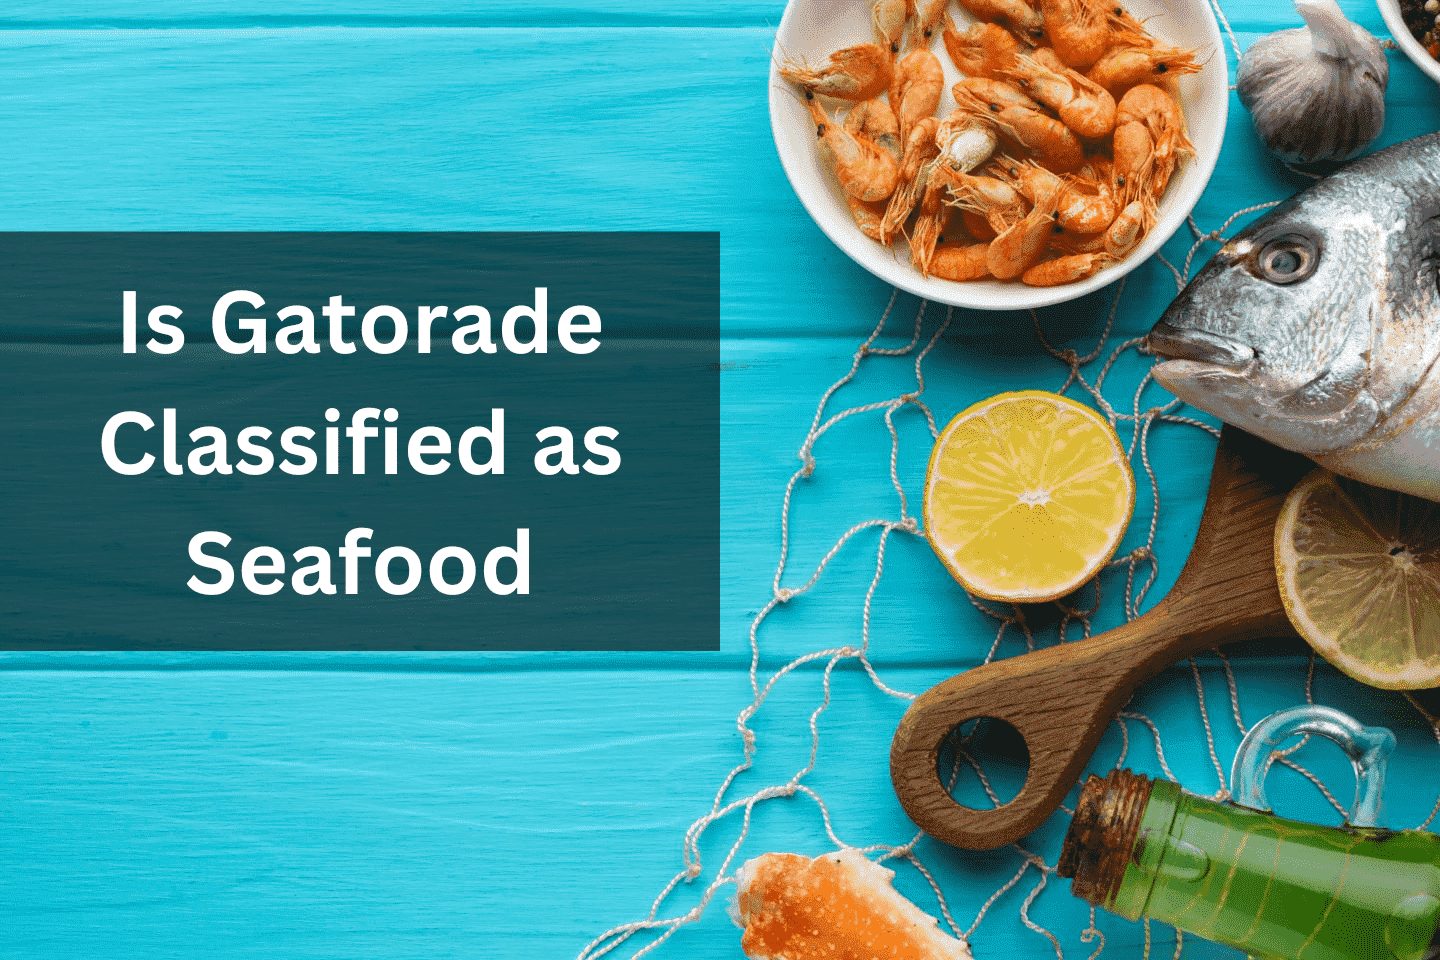 Is Gatorade Classified as Seafood